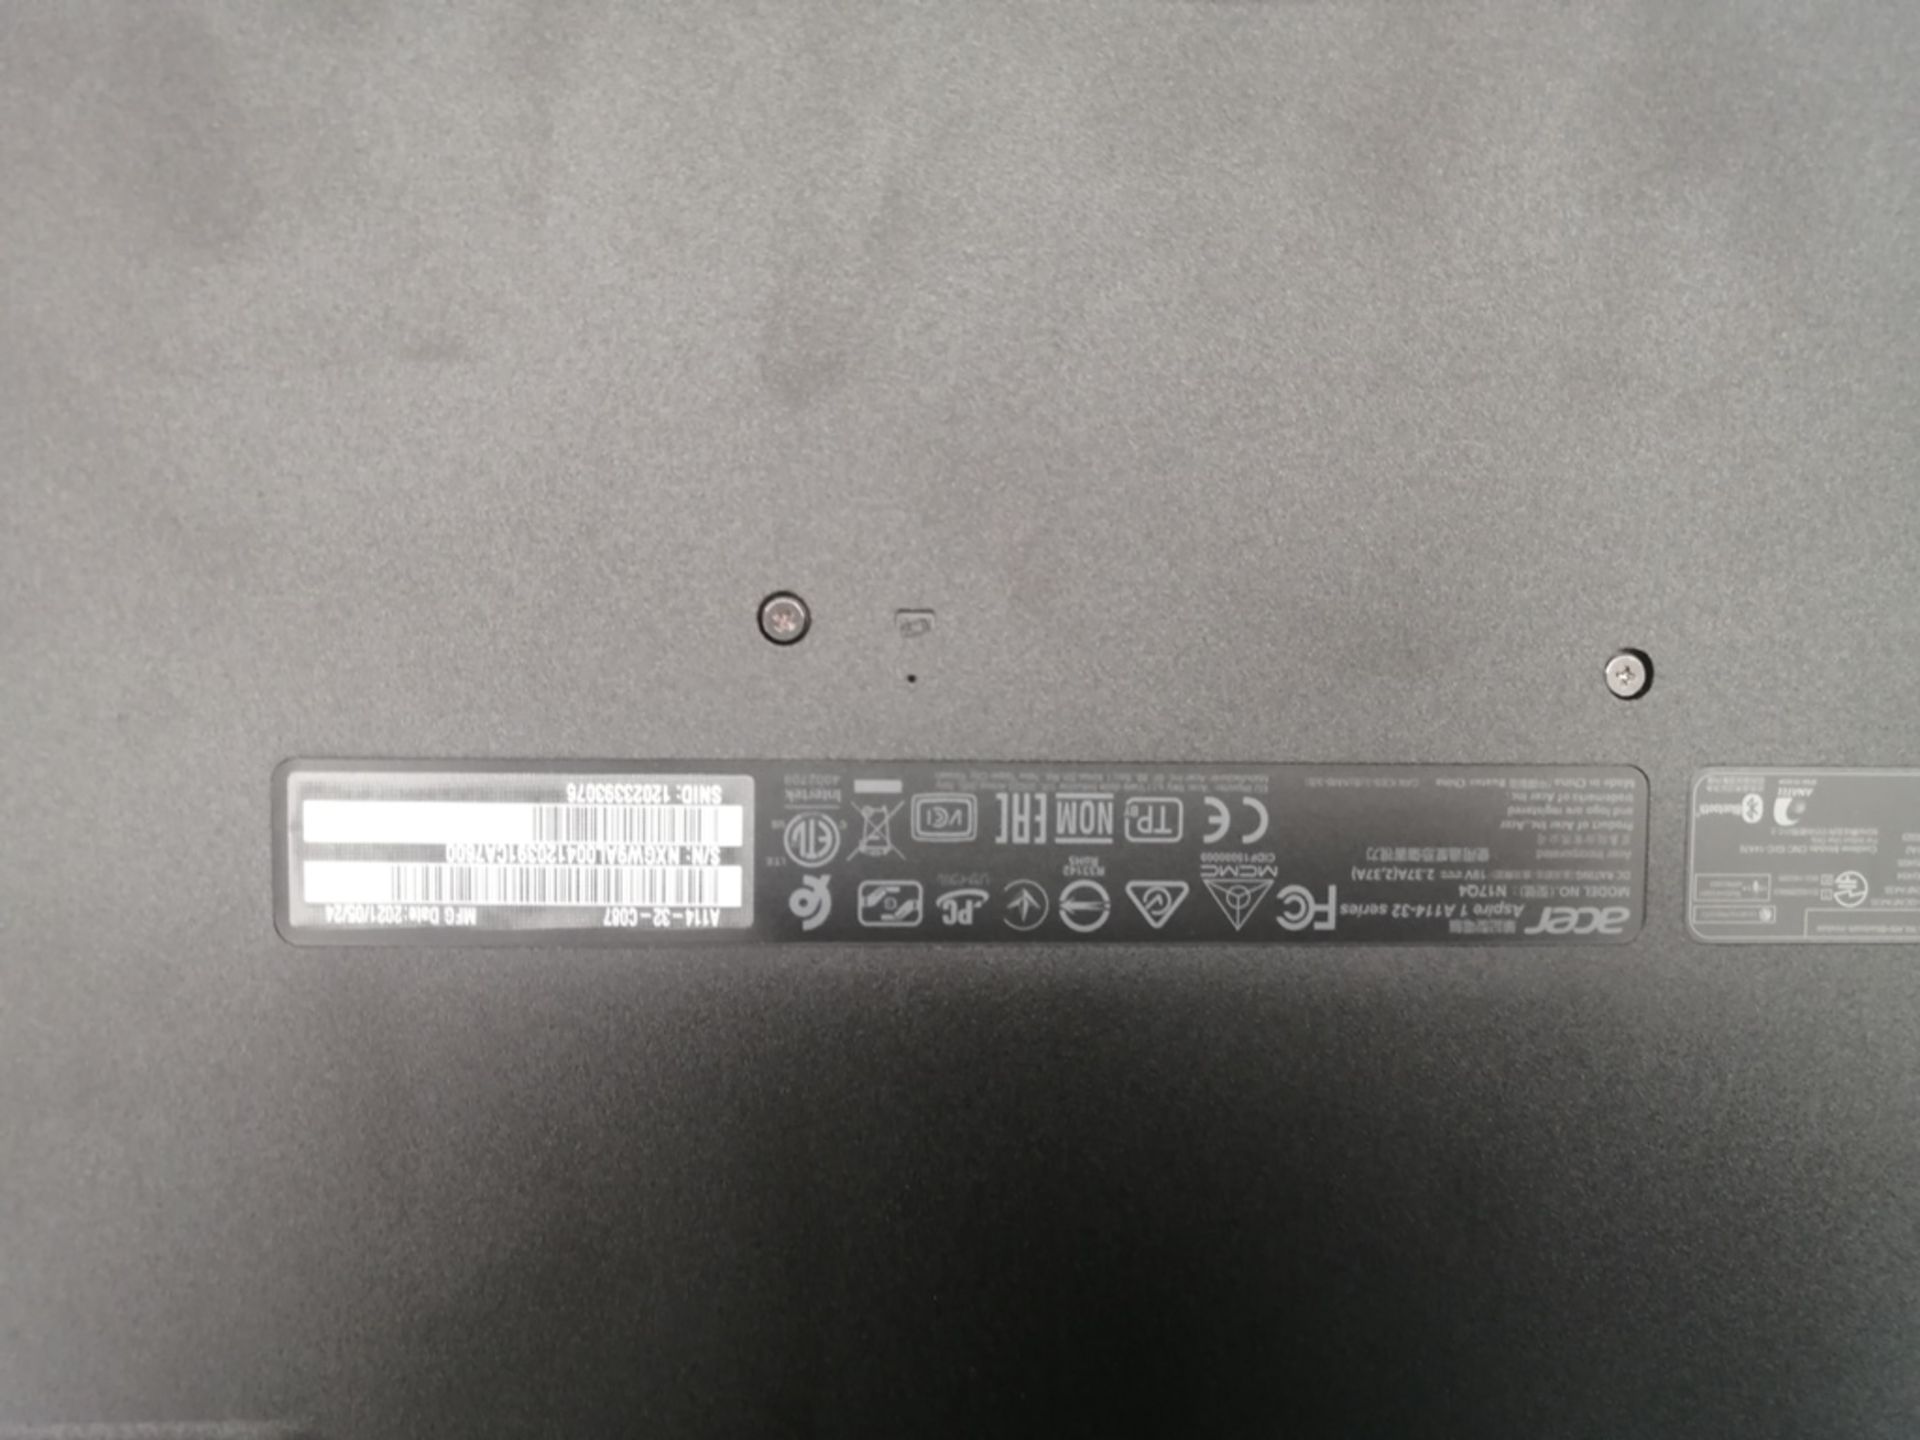 1 Computadora tipo Laptop marca Acer Modelo Aspire 114, Serie NXGW9AL004120391CA7600, Intel Celeron - Image 3 of 5